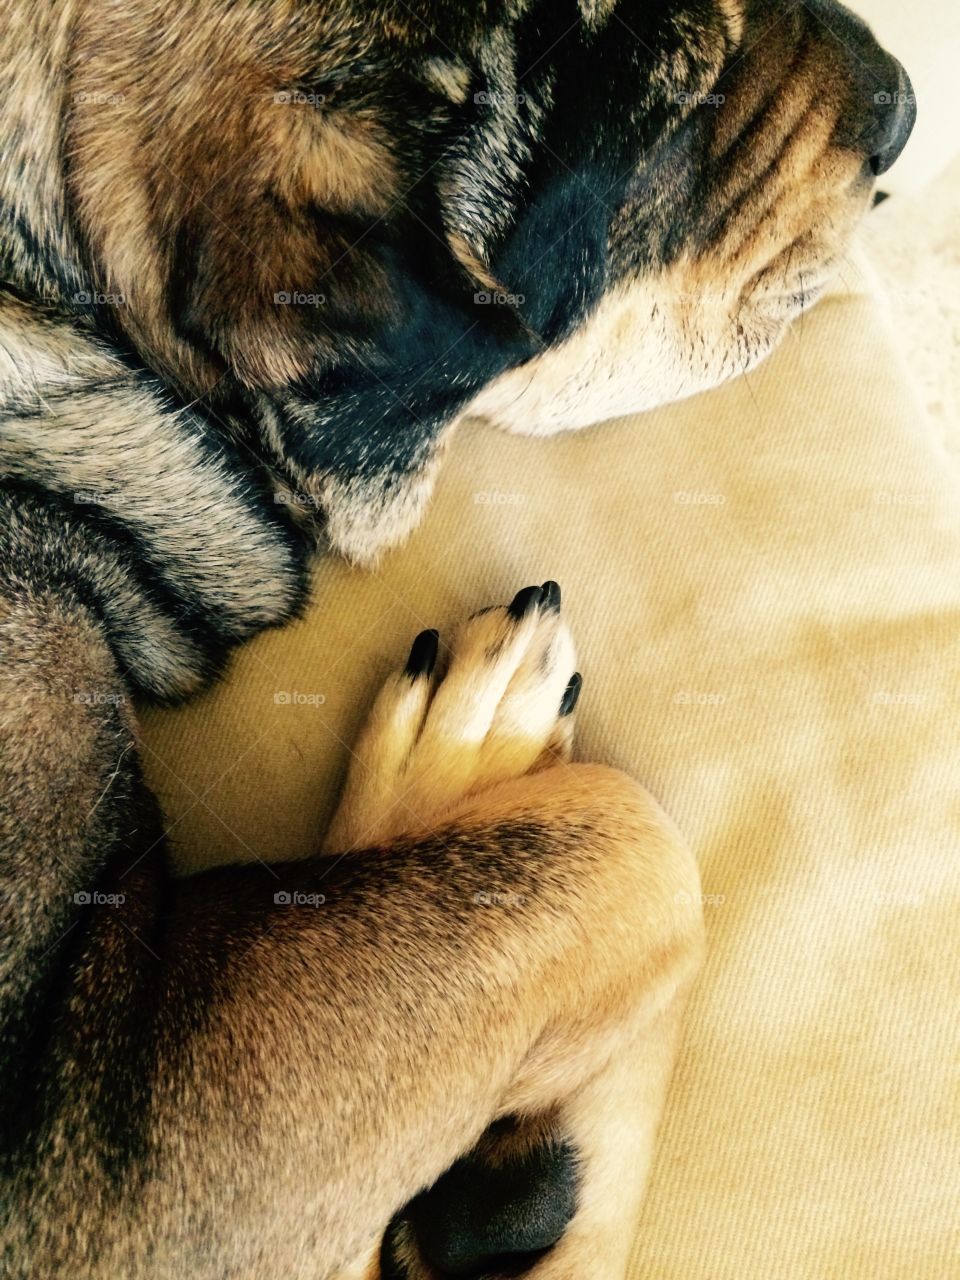 Dog paws